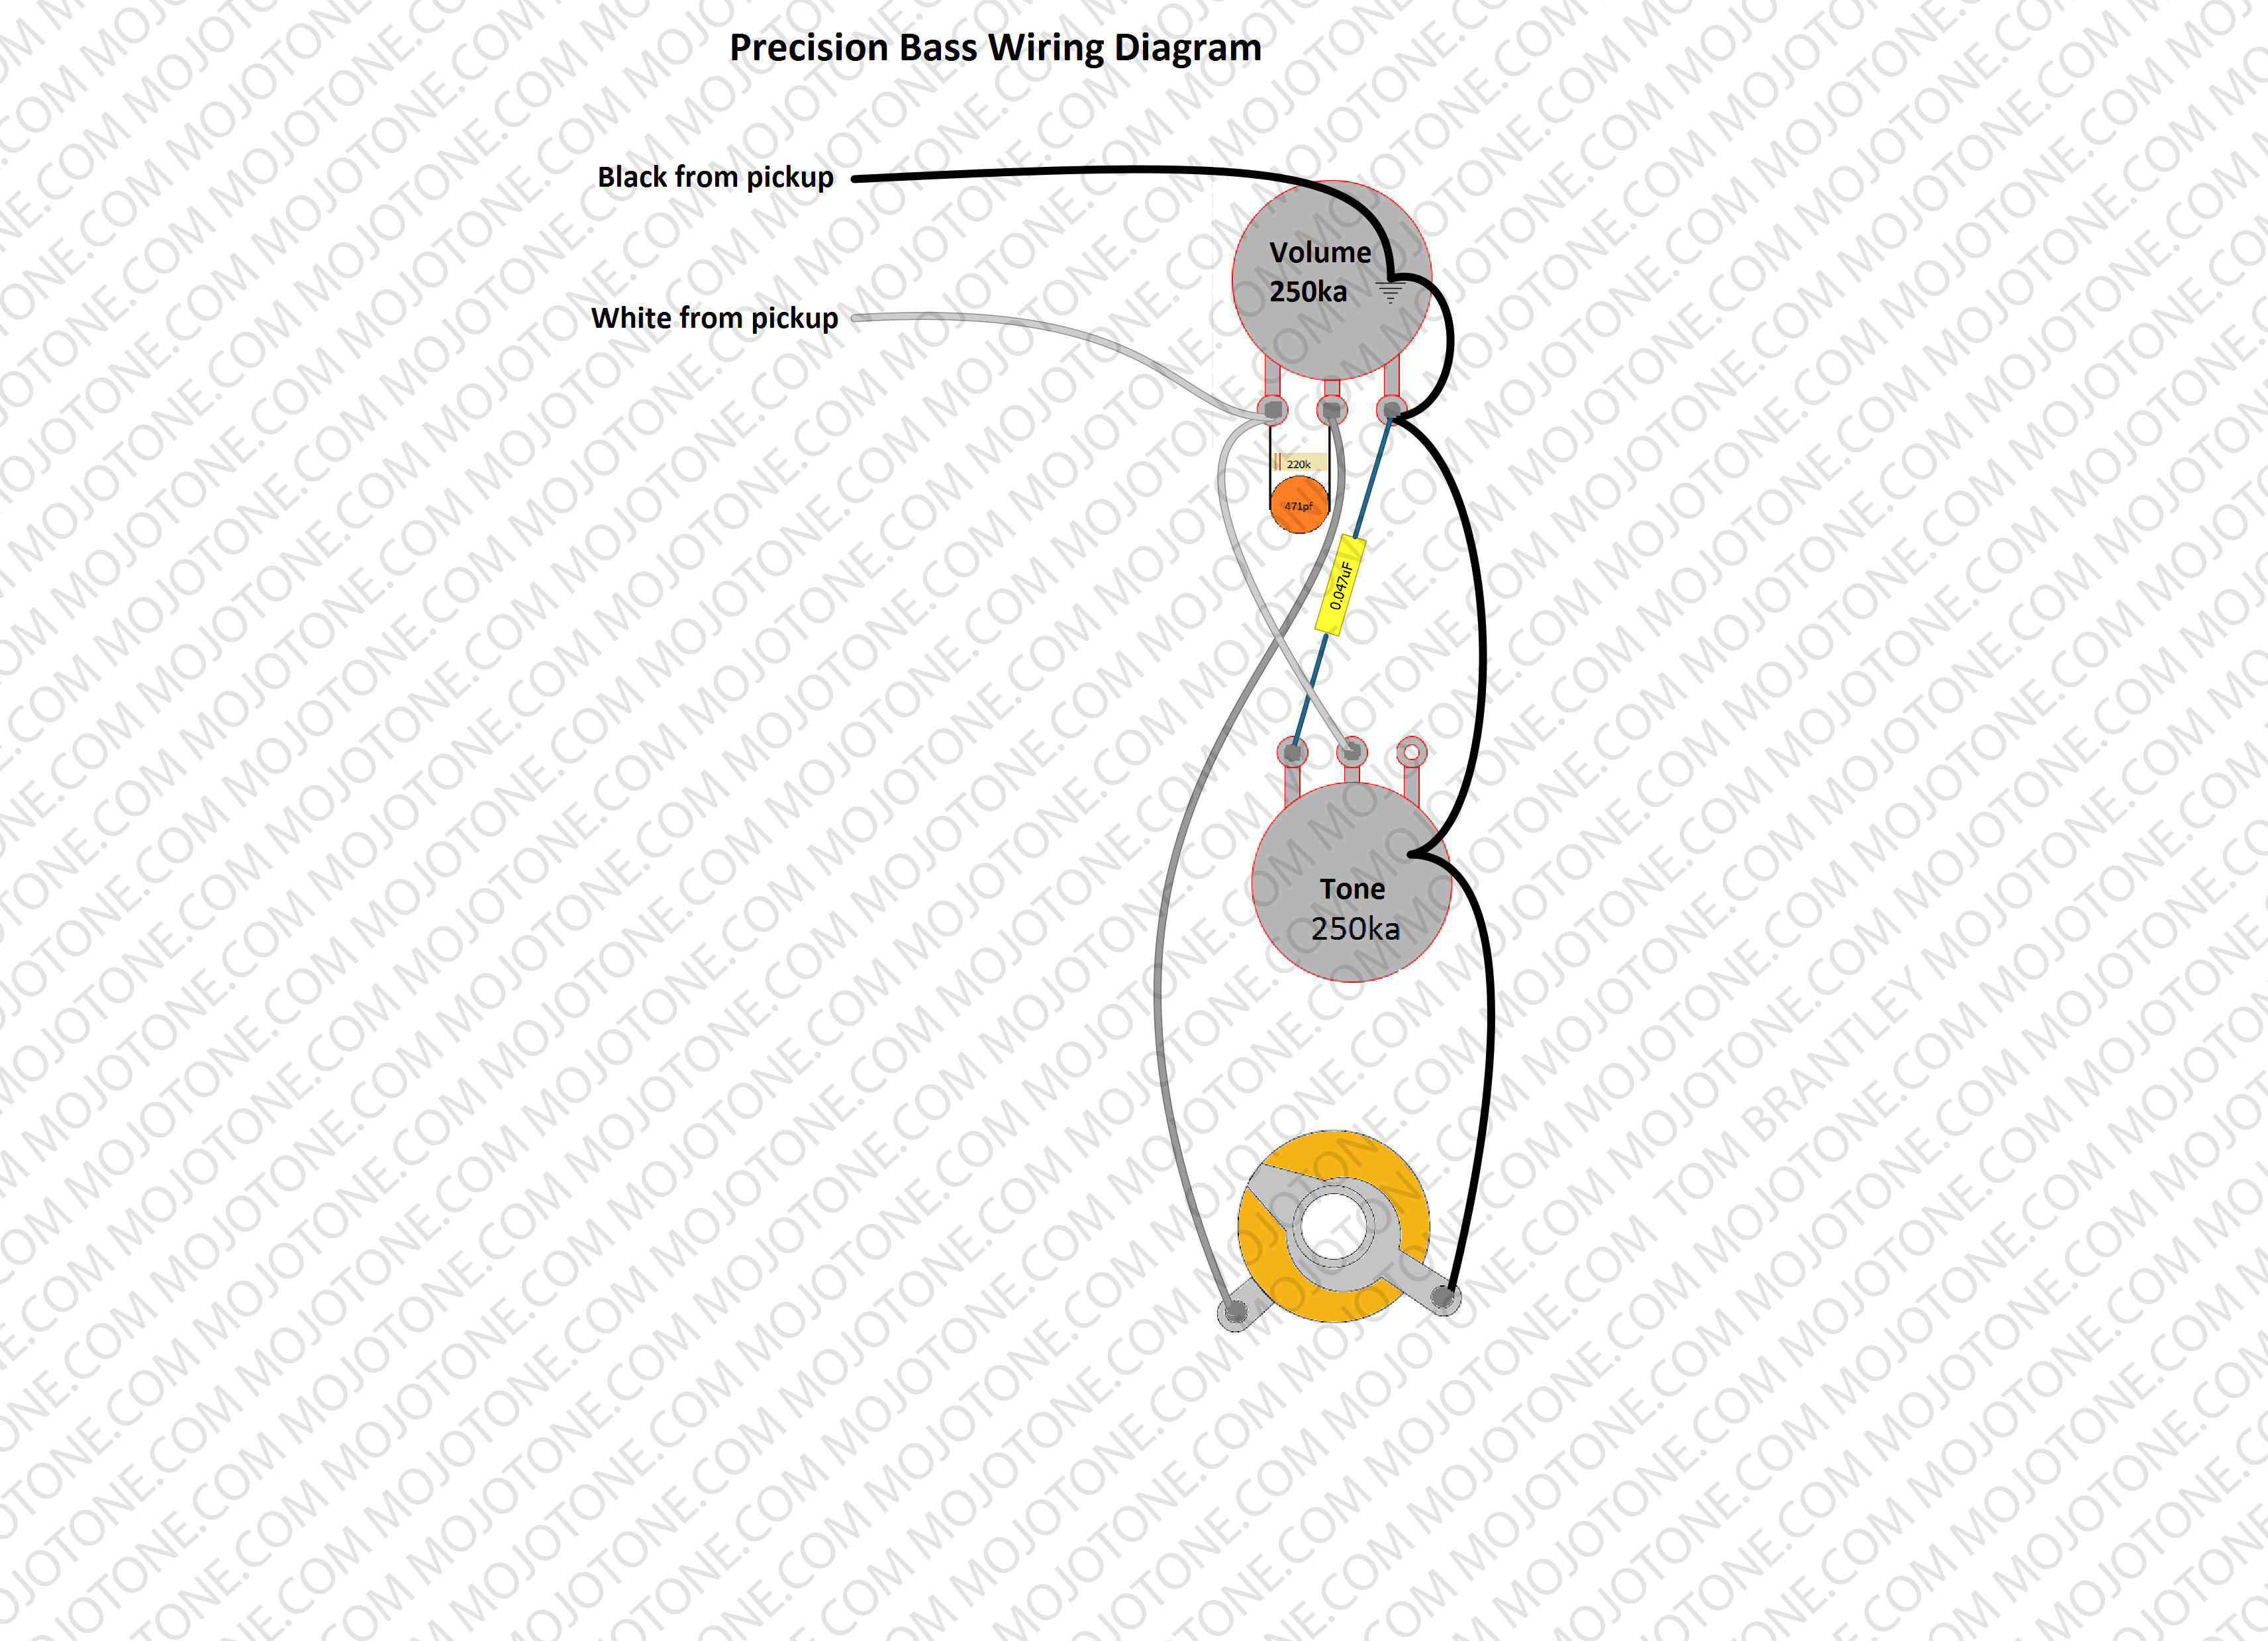 P-Bass Wiring Diagram - Precision Bass Wiring Diagram